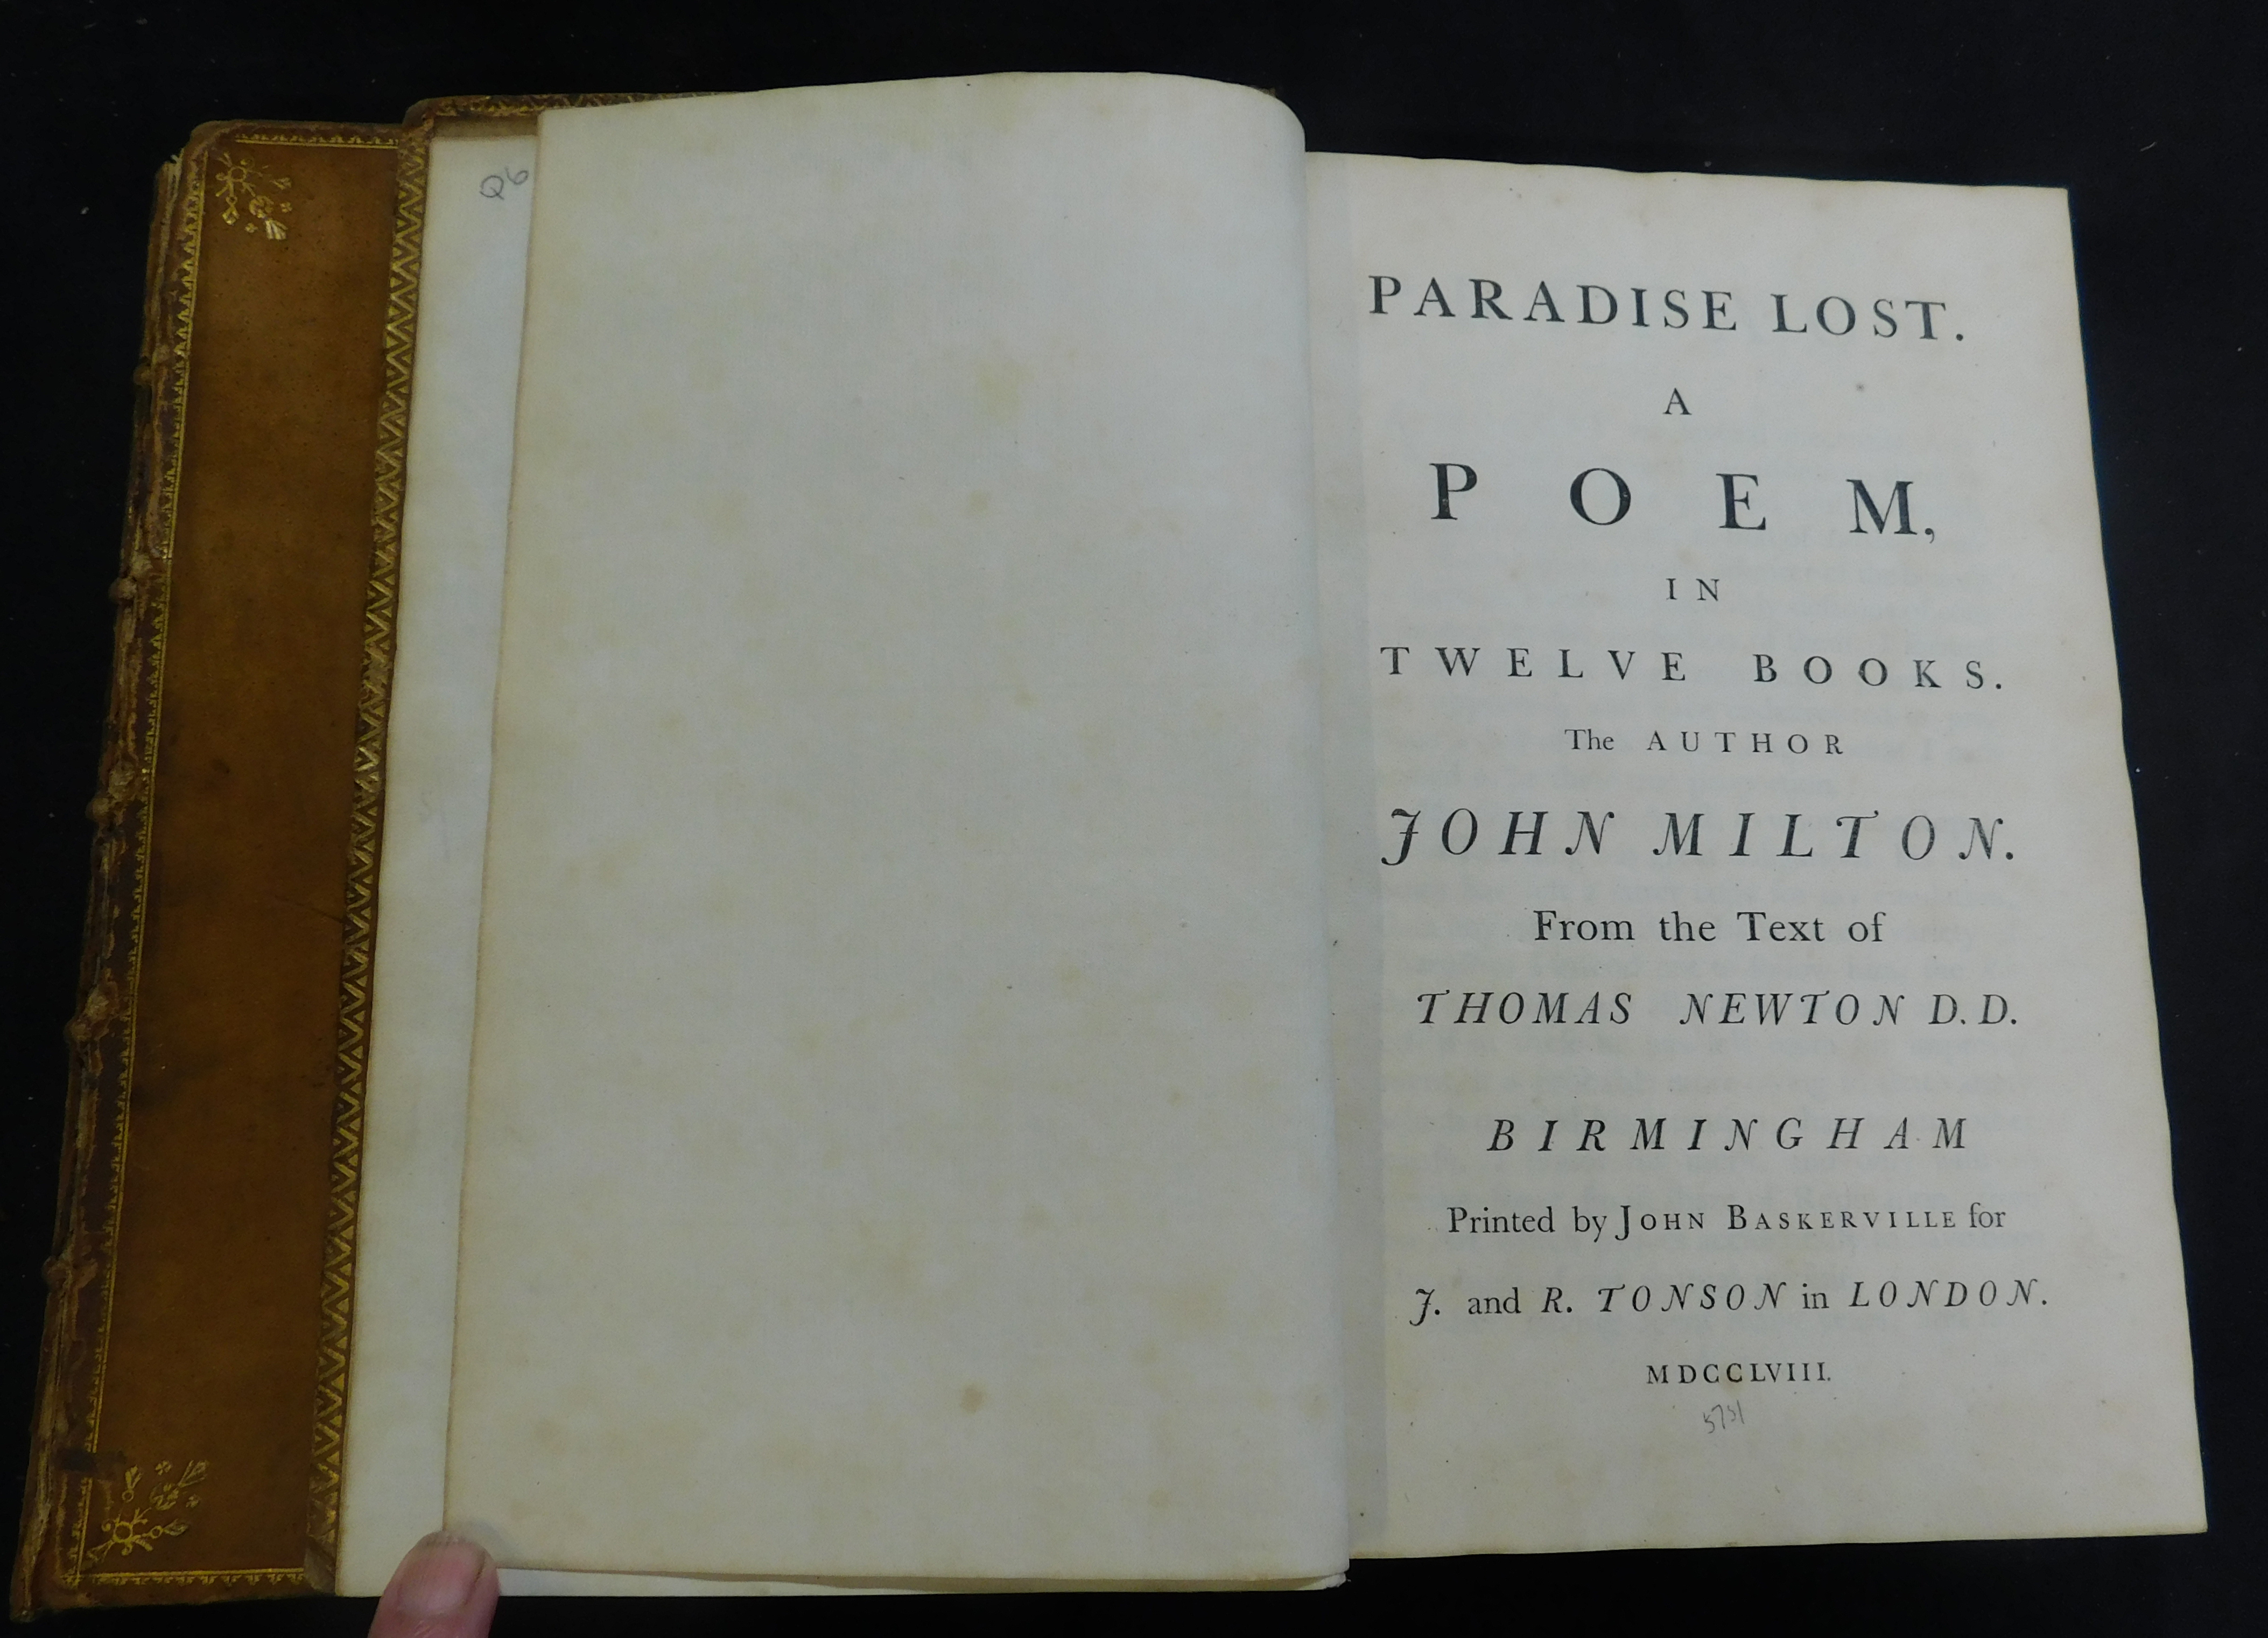 JOHN MILTON: PARADISE LOST - PARADISE REGAIN'D, Birmingham, printed by John Baskerville for J & R